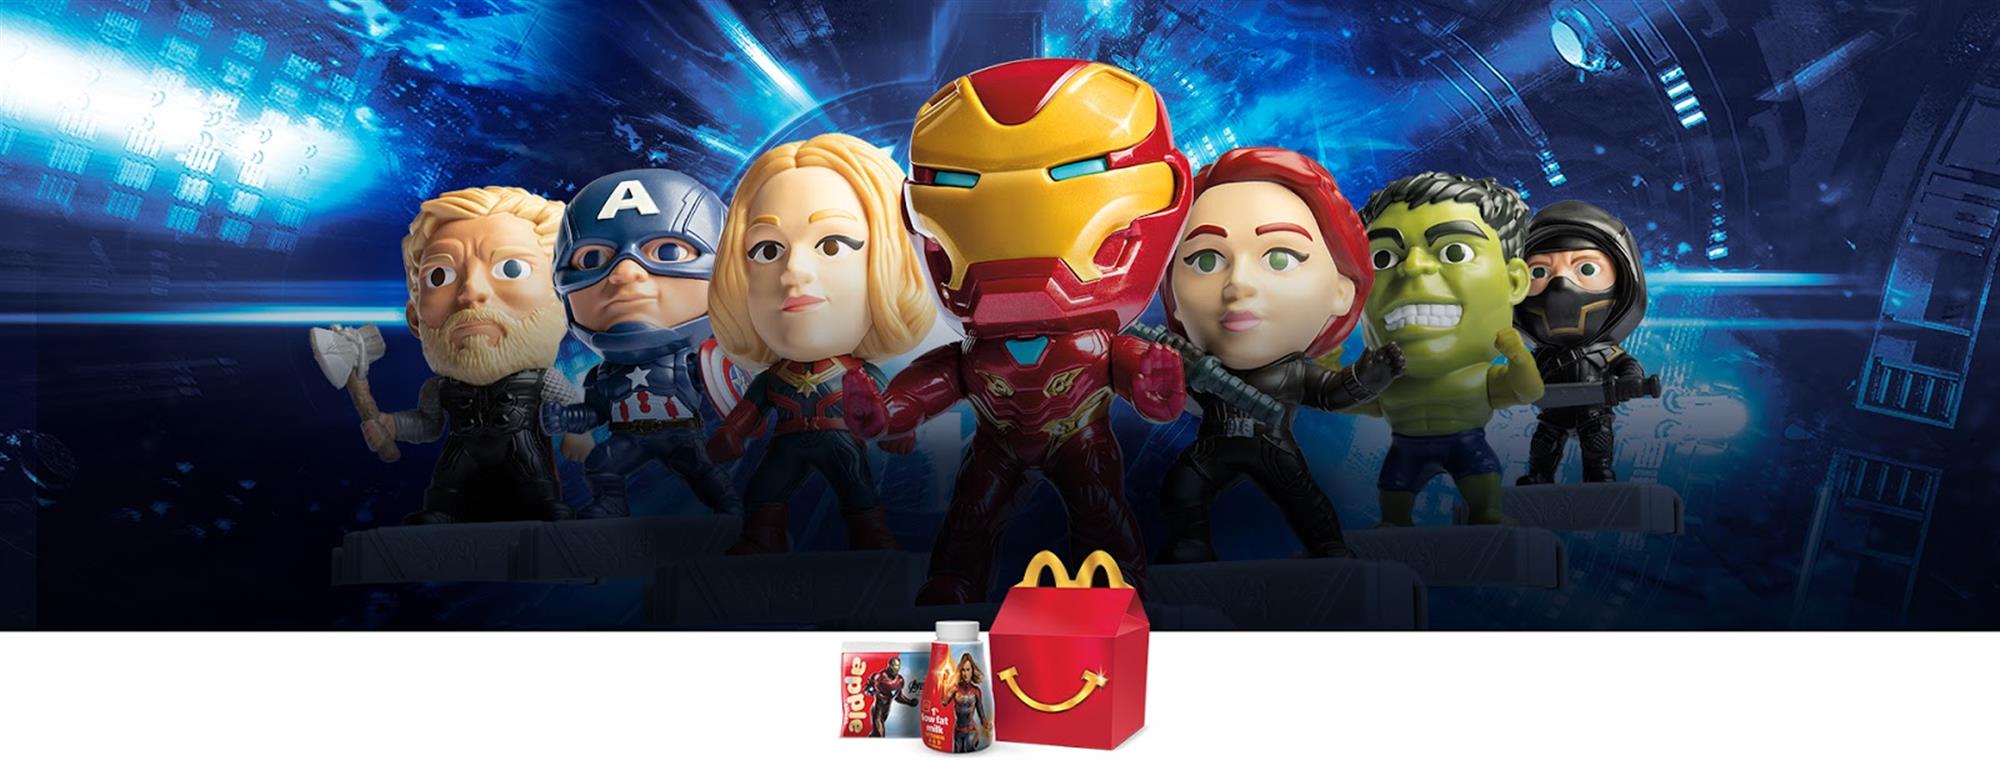 2019 McDonald’s Marvel Avengers Endgame Happy Meal Toys New Sealed You Pick